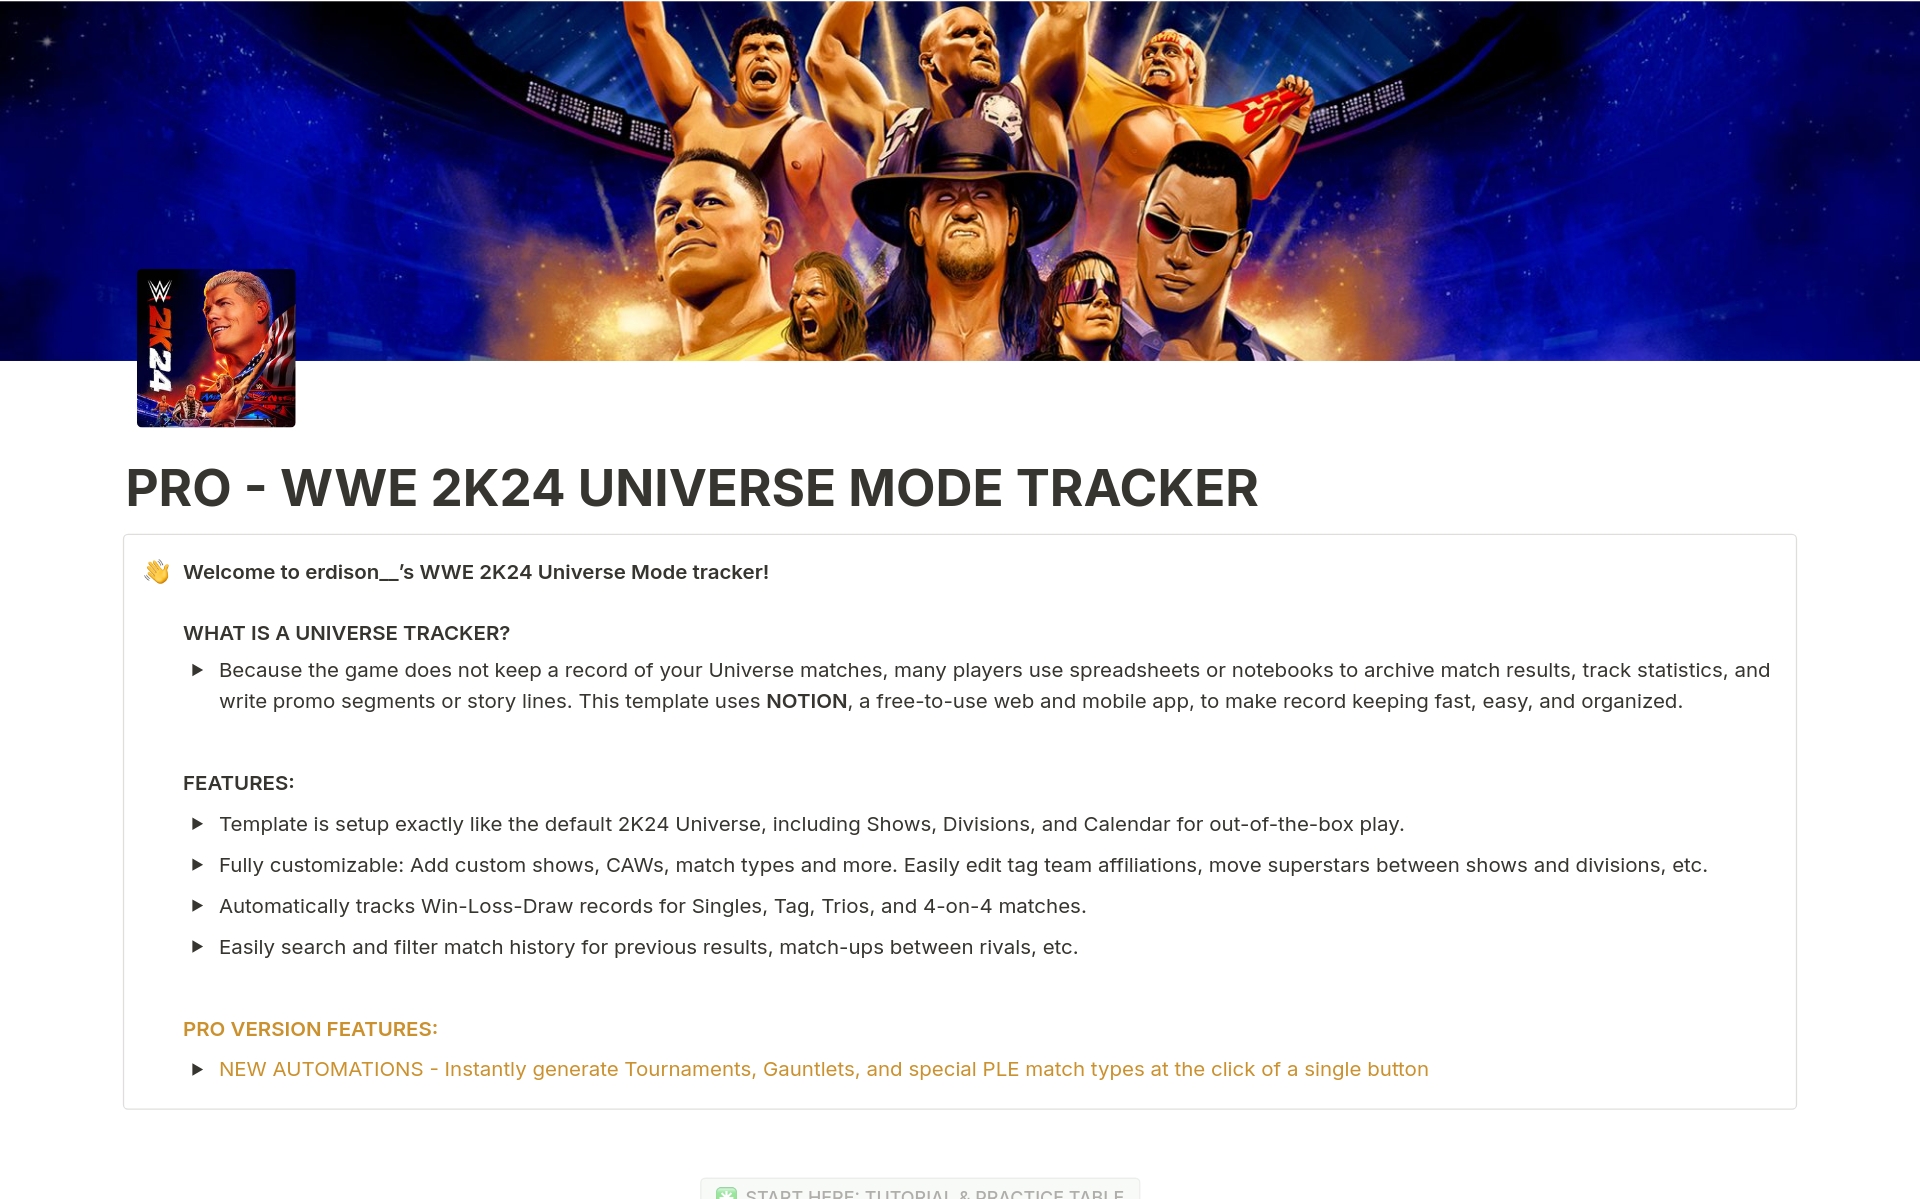 Aperçu du modèle de PRO - WWE 2K24 Universe Mode Tracker